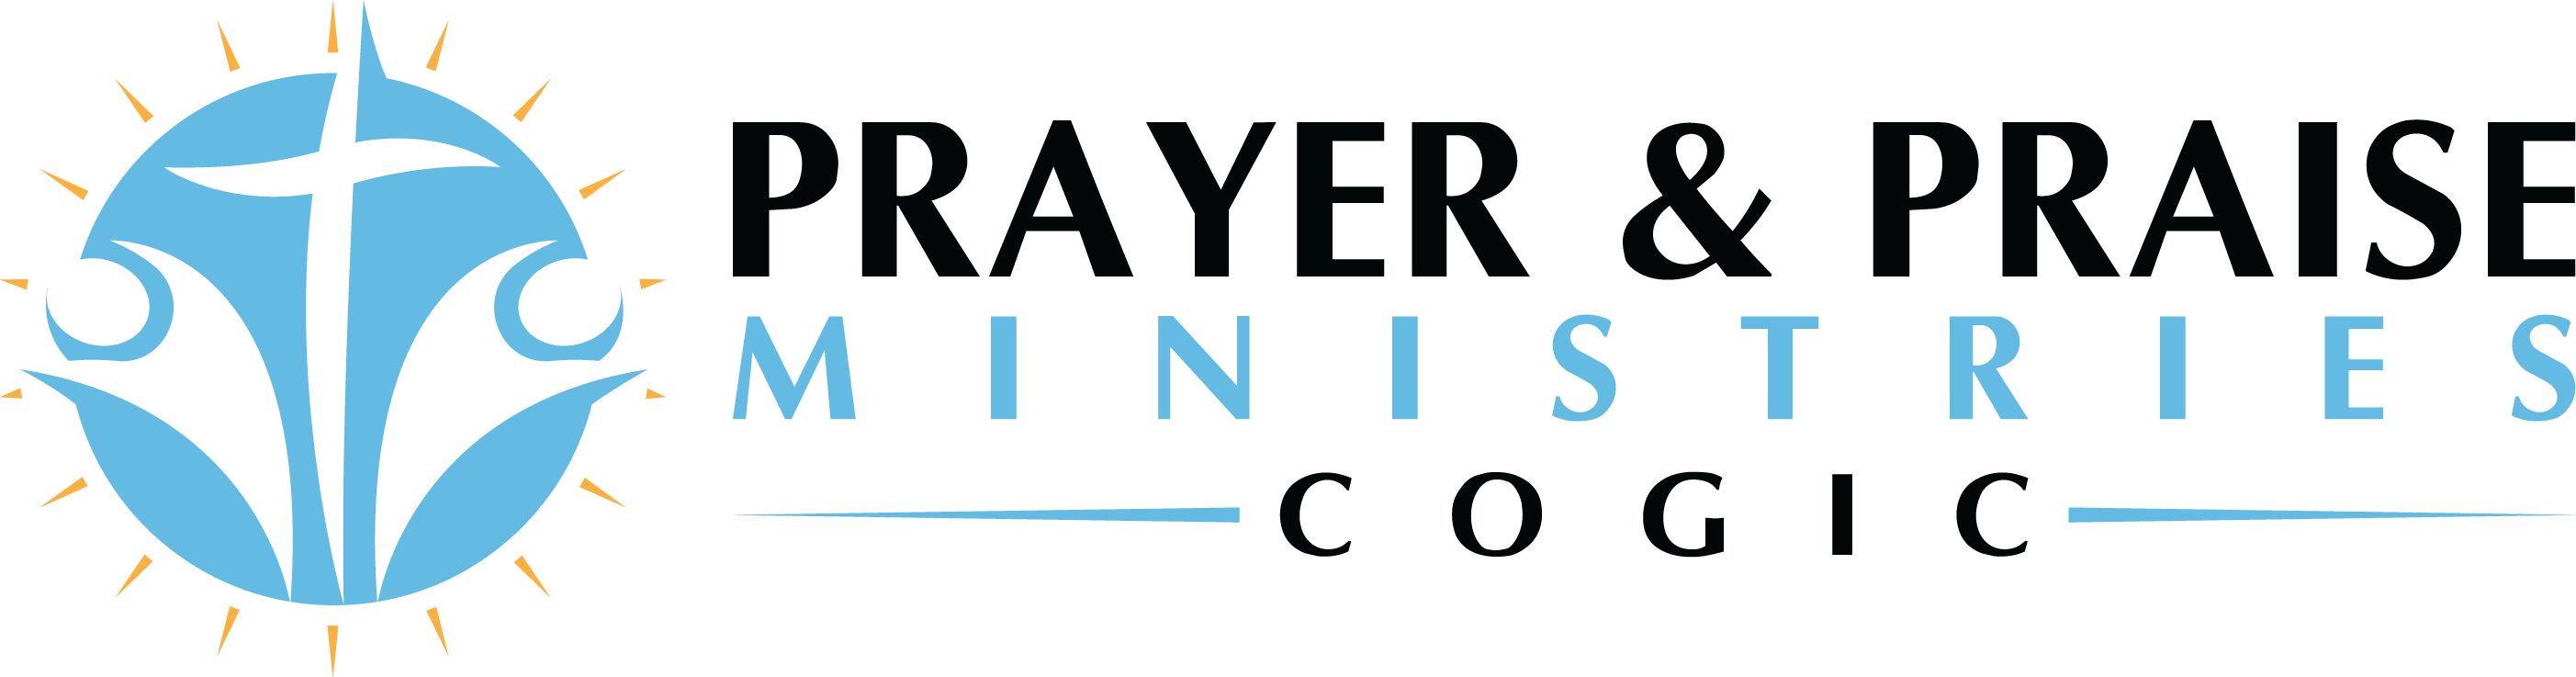 PRAYER & PRAISE MINISTRIES